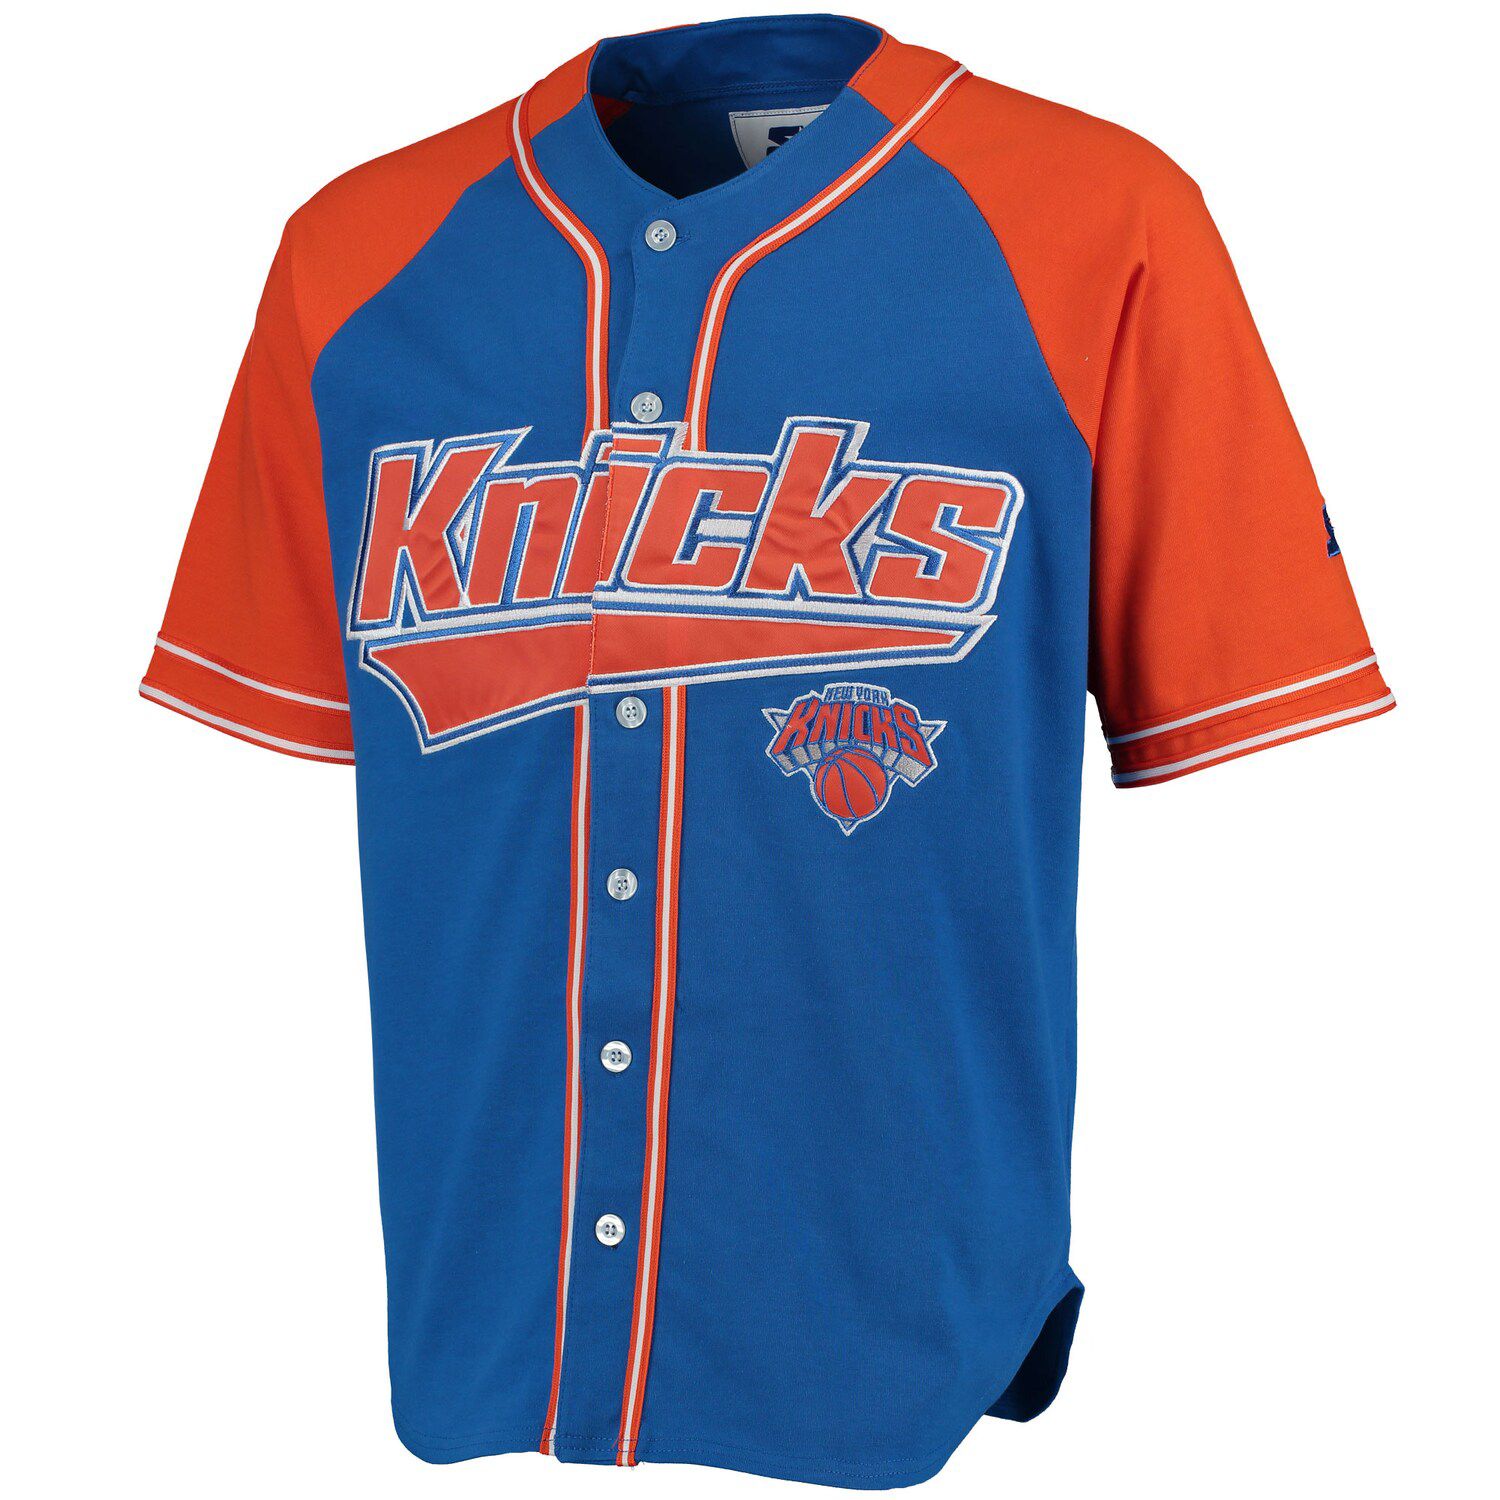 Orange New York Knicks Baseball Jersey